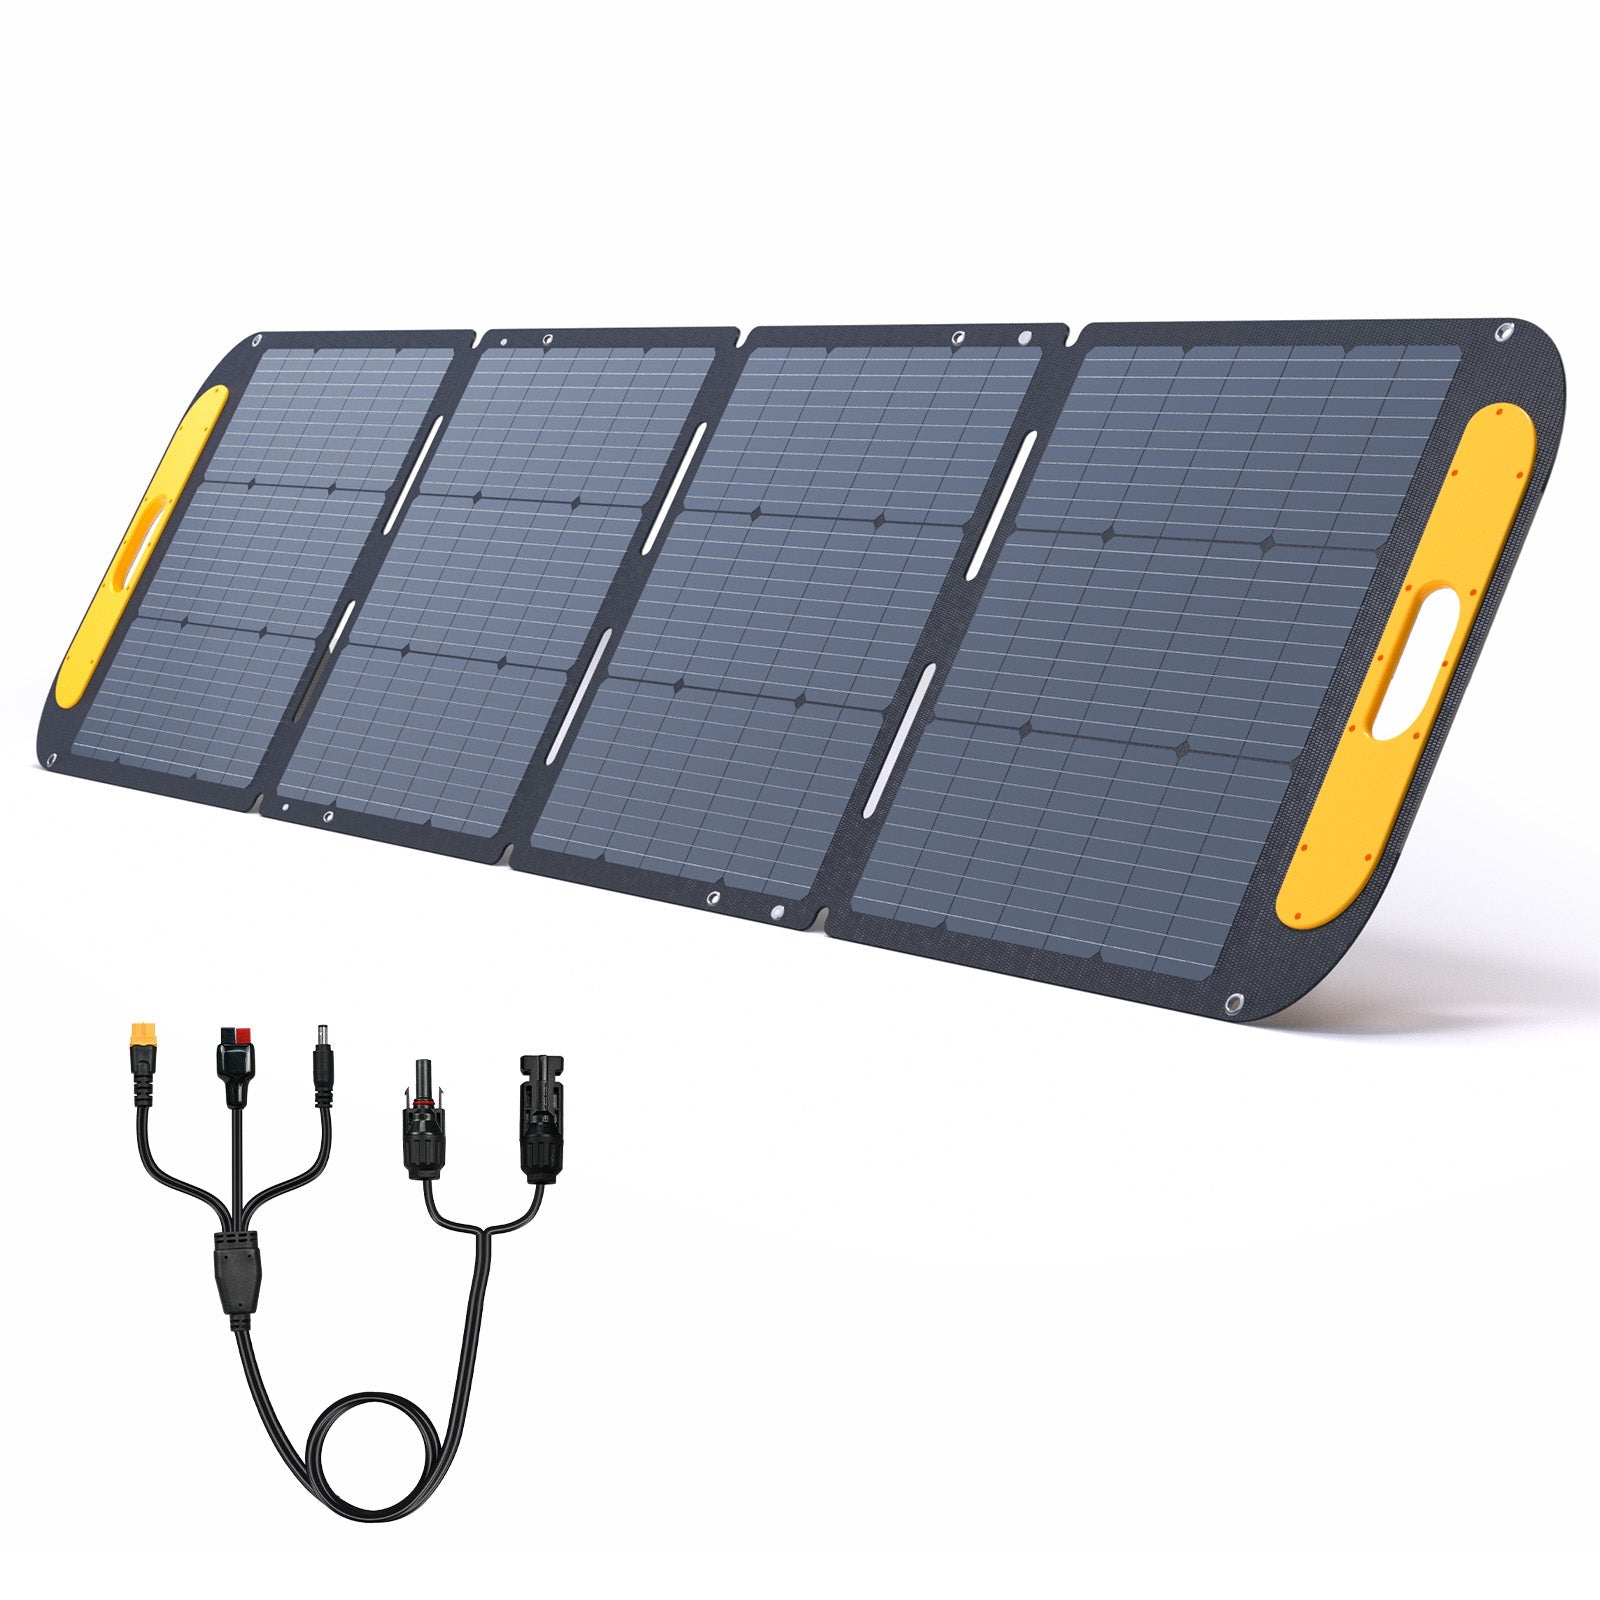 VTOMAN 220W Pro Portable Solar Panel